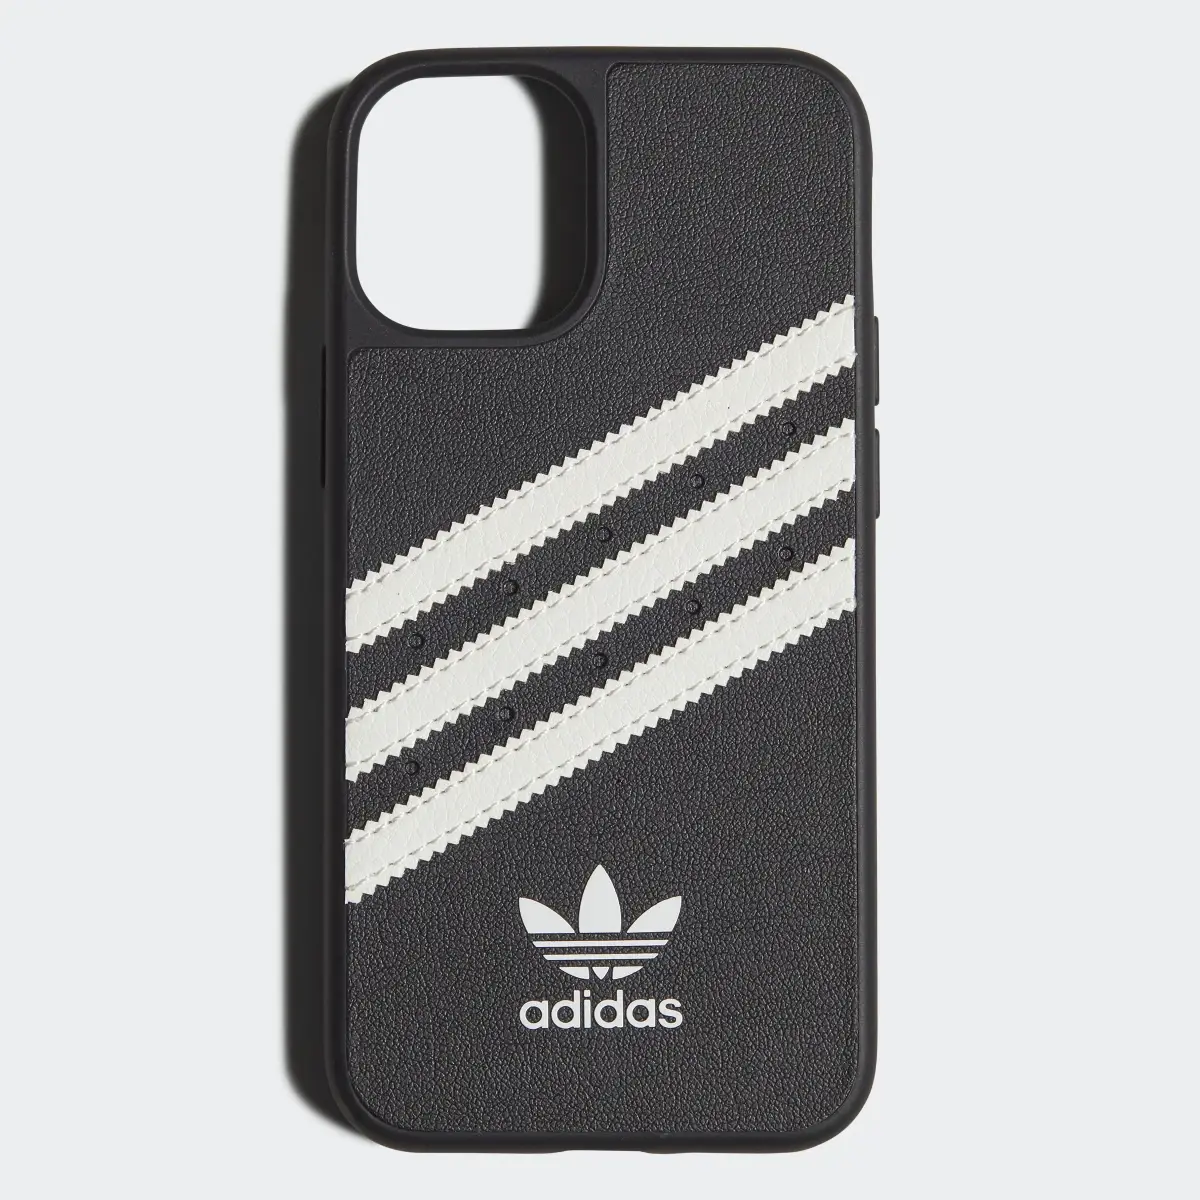 Adidas Moulded Samba for iPhone 12 mini. 2